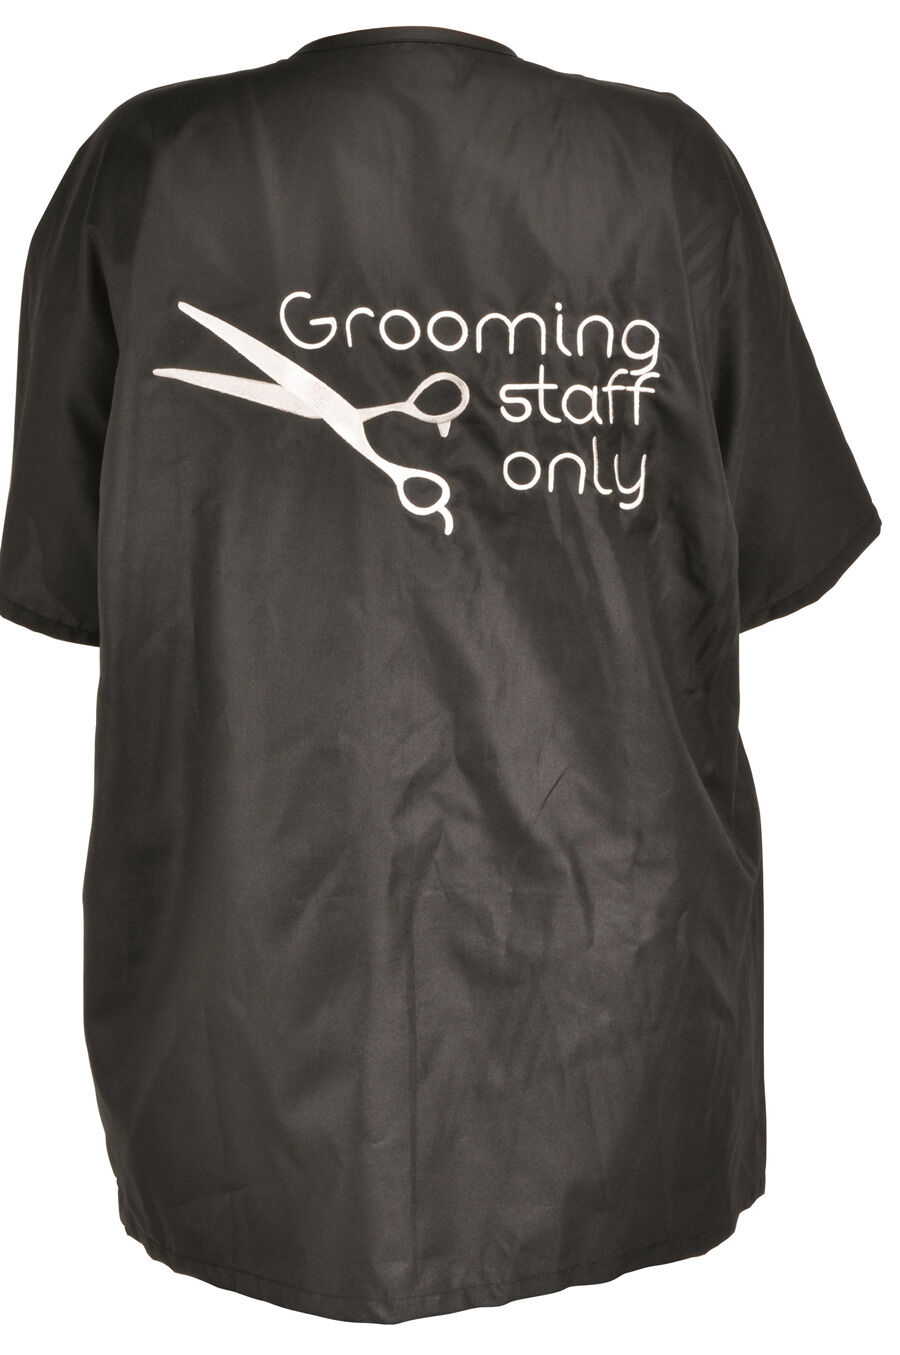 Grooming-Jacke-gross-gerade-geschnitten-schwarz-2-S-CO-G655-A